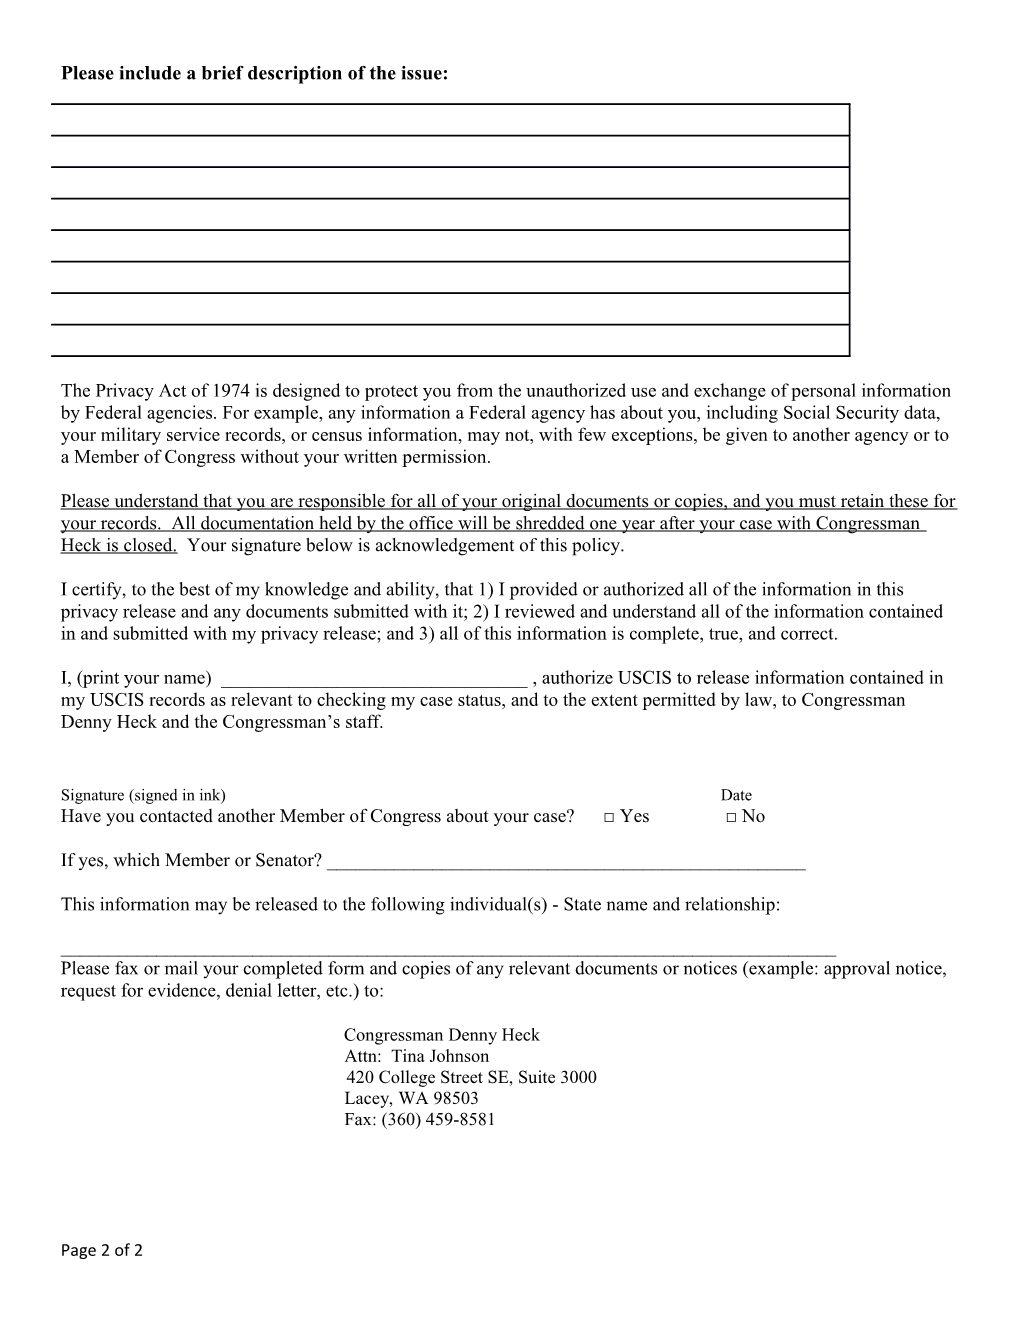 Congressman Denny Heck Immigration Privacy Release Form